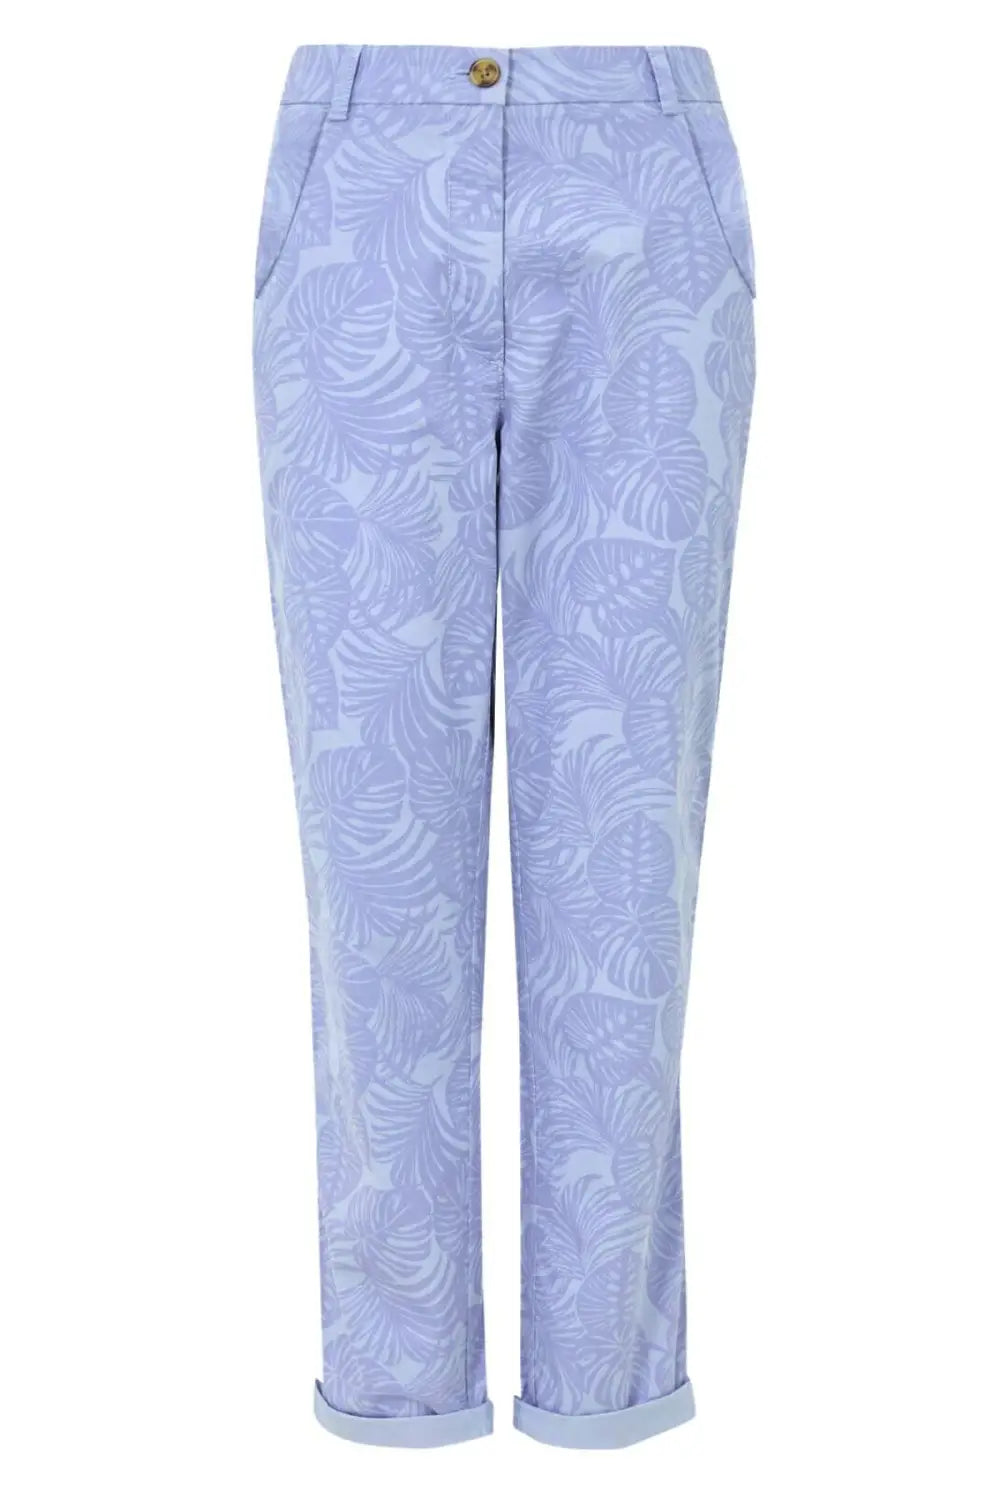 M&S Palm Print Chino Trousers